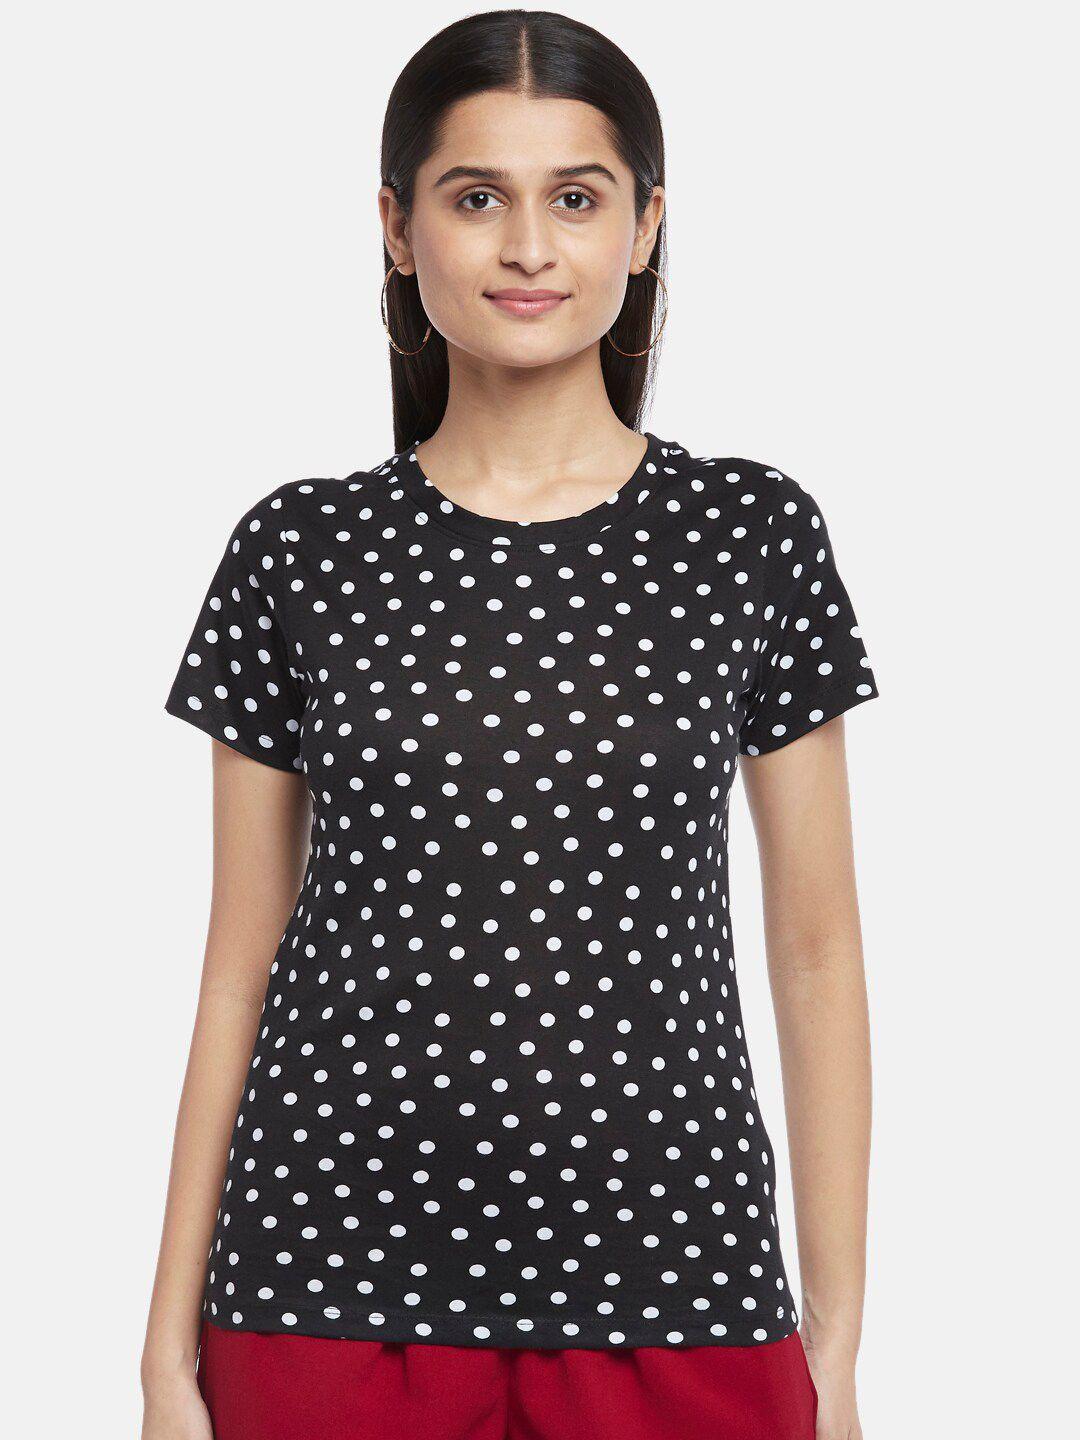 honey by pantaloons women black & white polka dot printed t-shirt